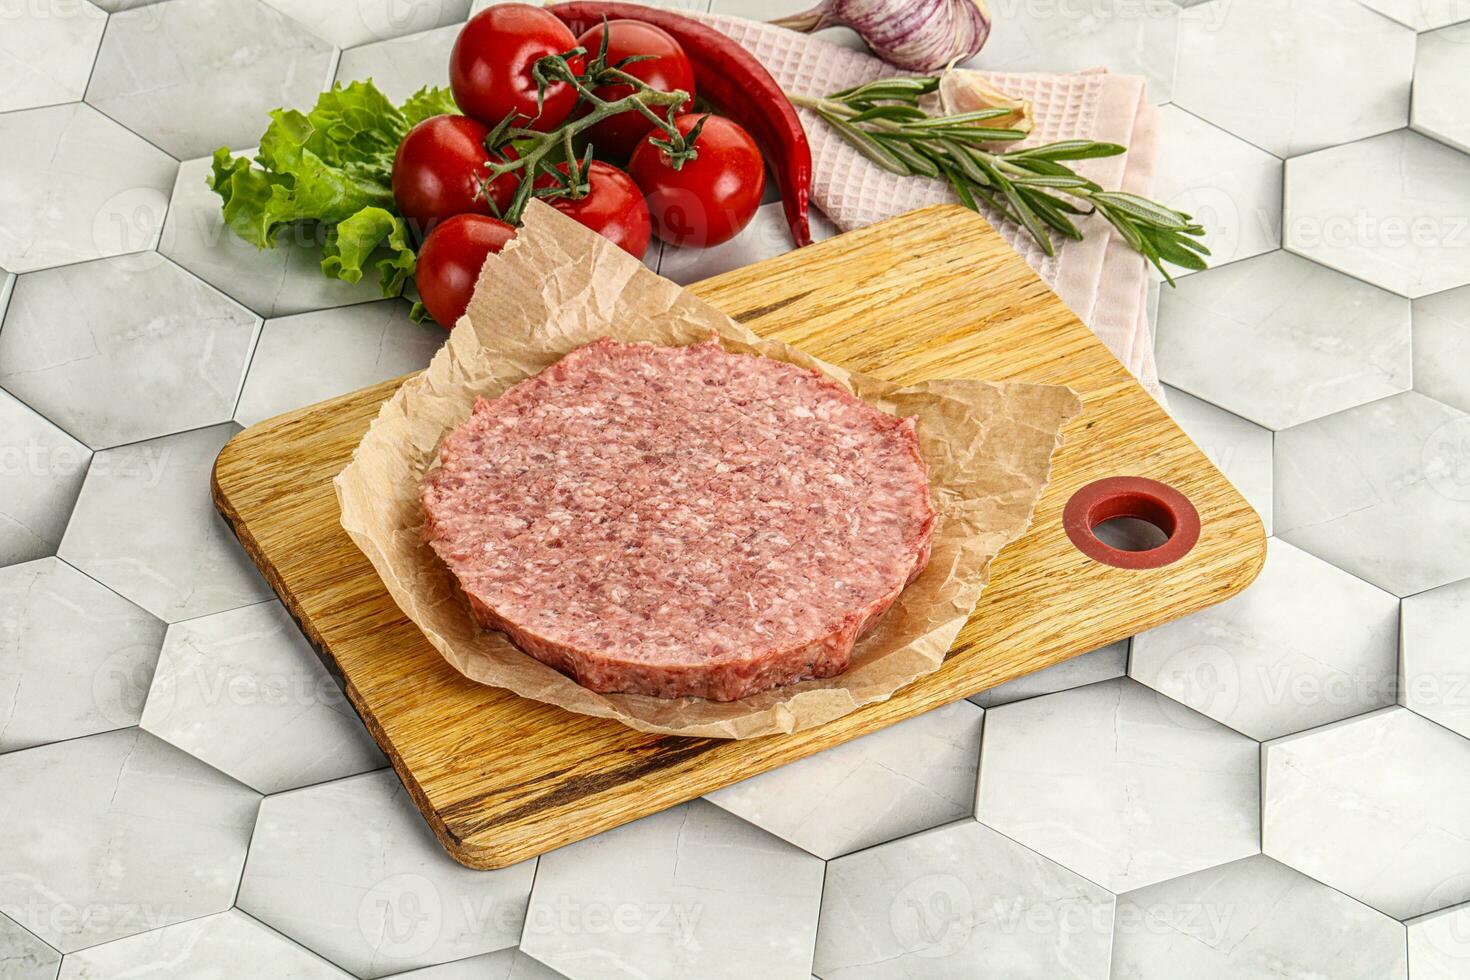 rauw rundvlees ongekookt hamburger kotelet foto